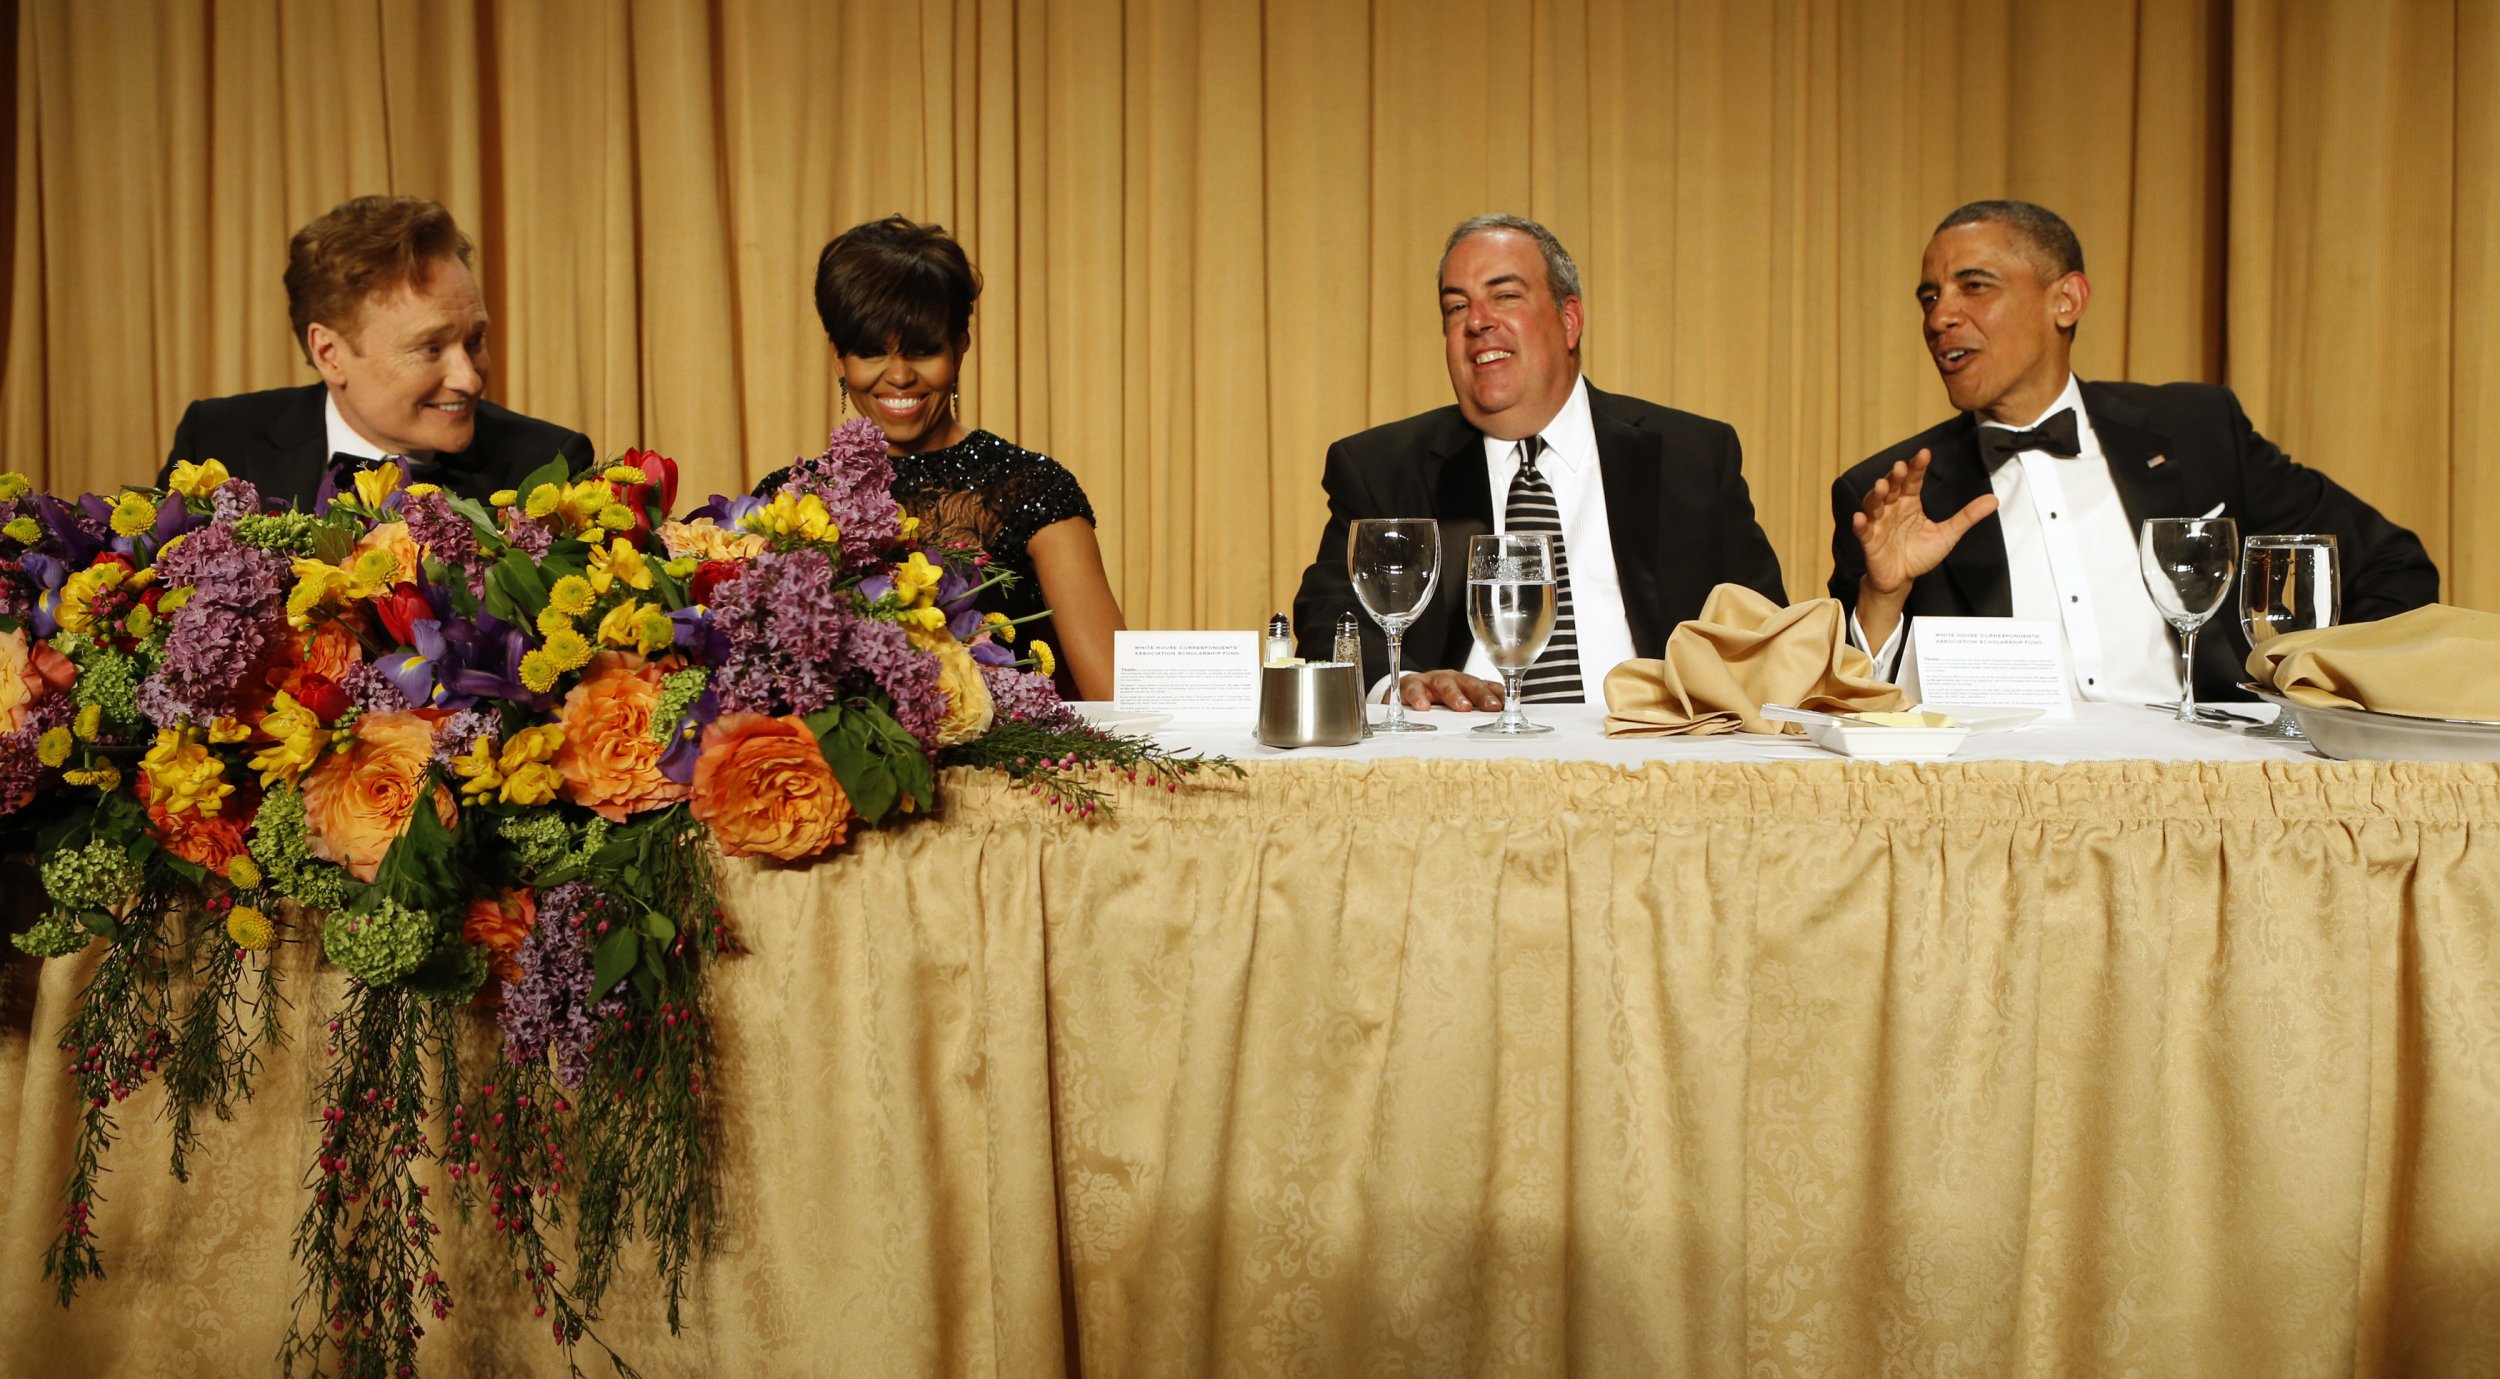 White House Correspondents Dinner 2013